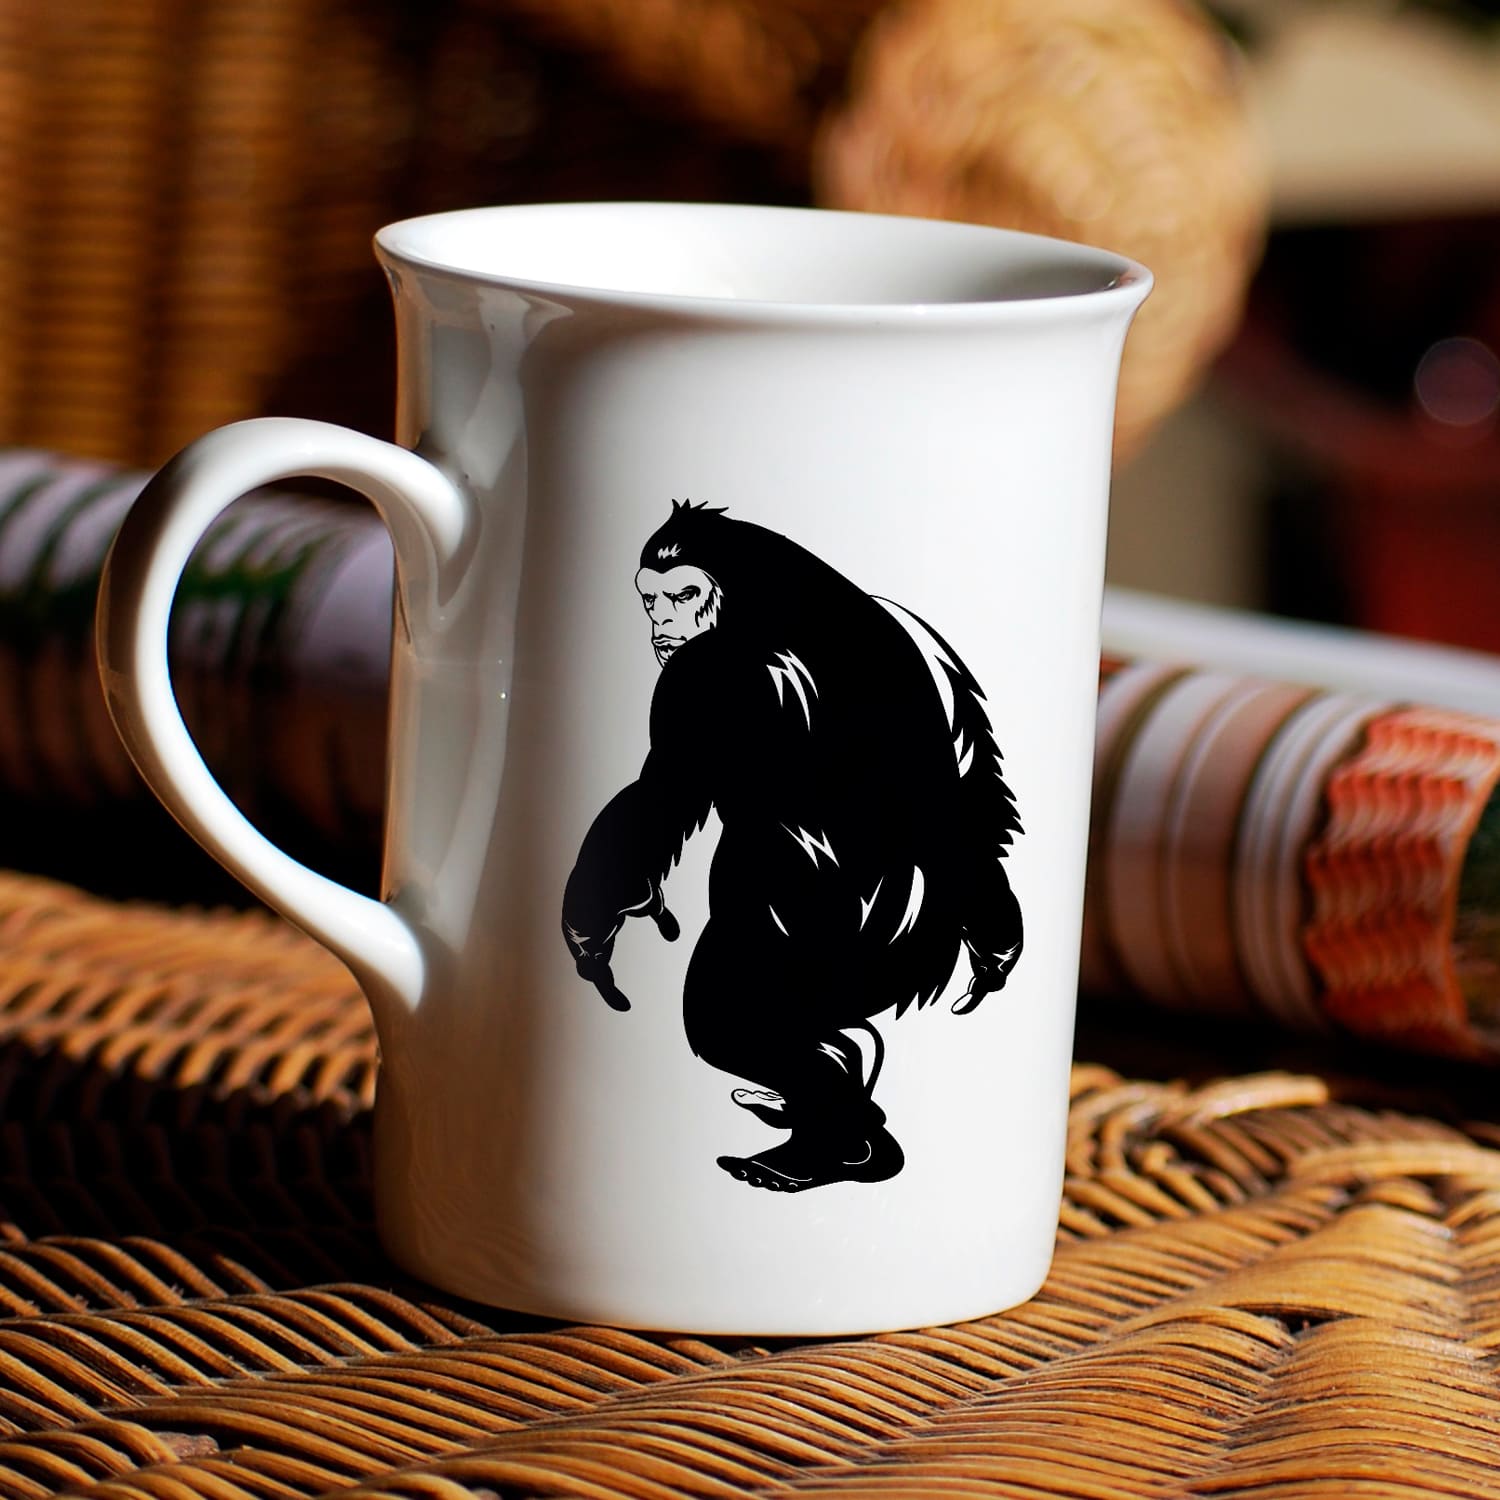 White coffee mug with a black gorilla on it.